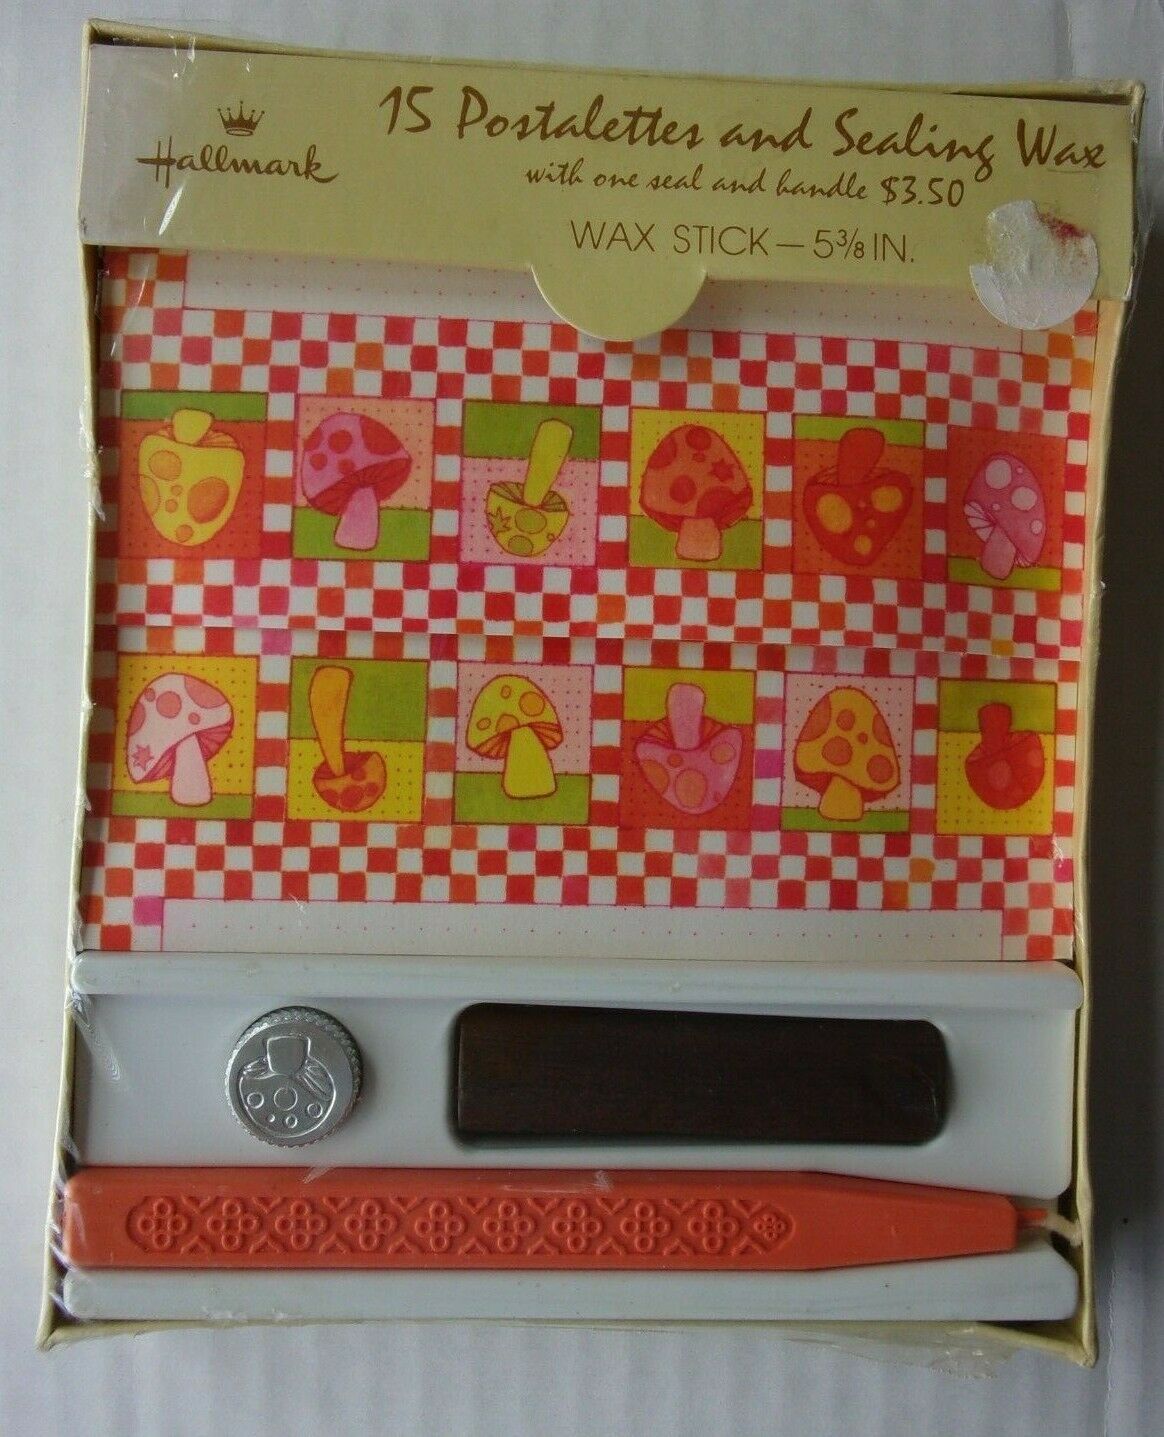 New/Sealed Vintage Hallmark Postalettes & Sealing Wax Box Set-Mushroom/Red Check